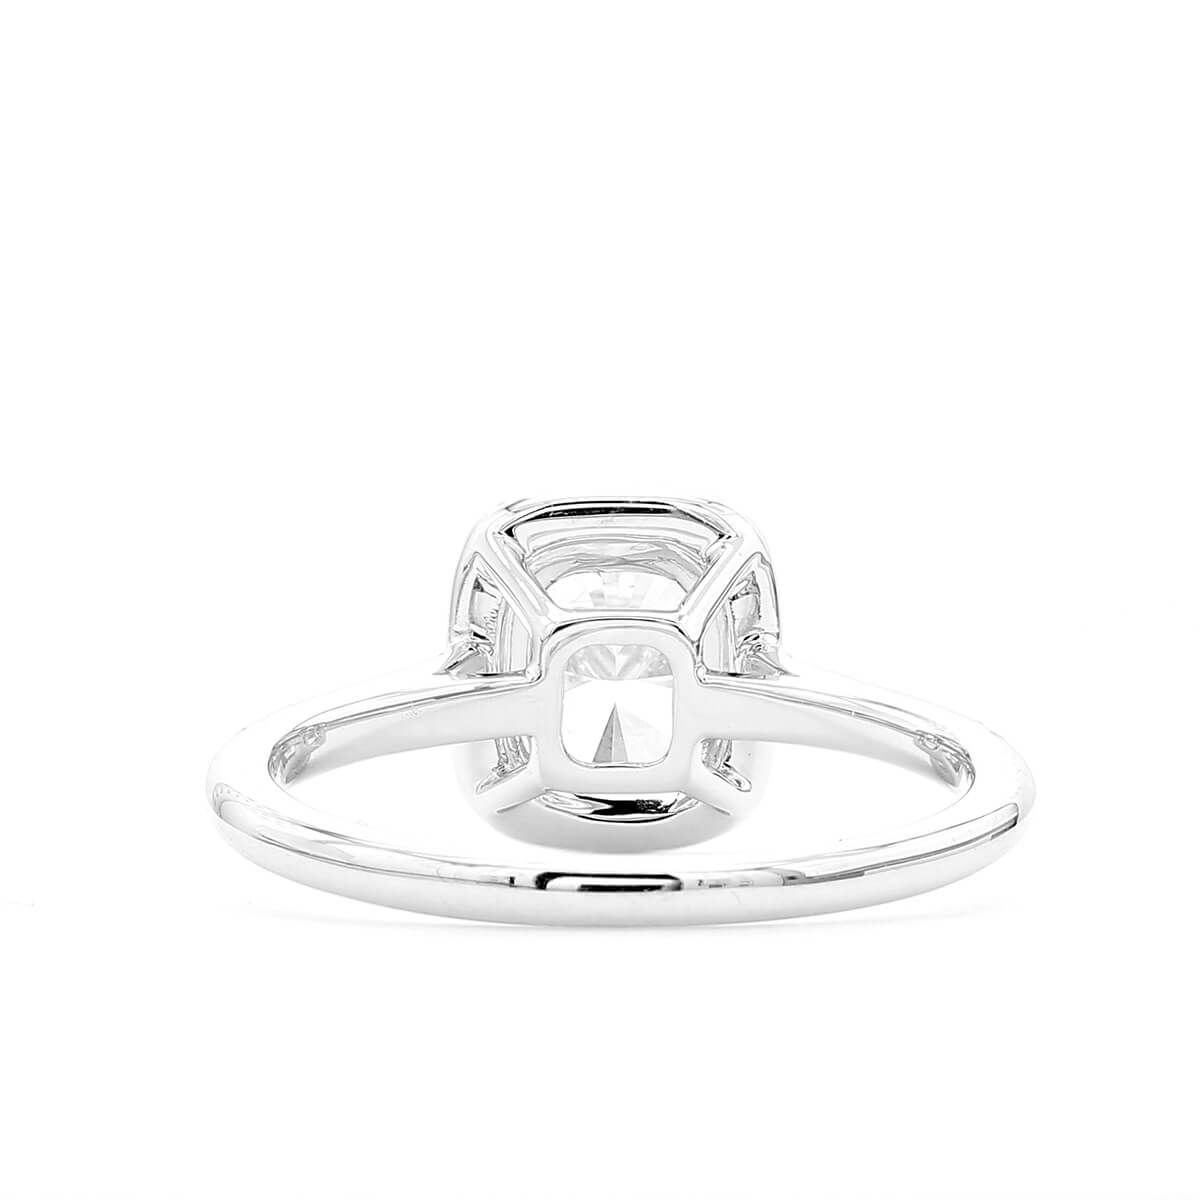  White Diamond Ring, 1.02 Ct. (1.30 Ct. TW), Cushion shape, GIA Certified, 7283259698